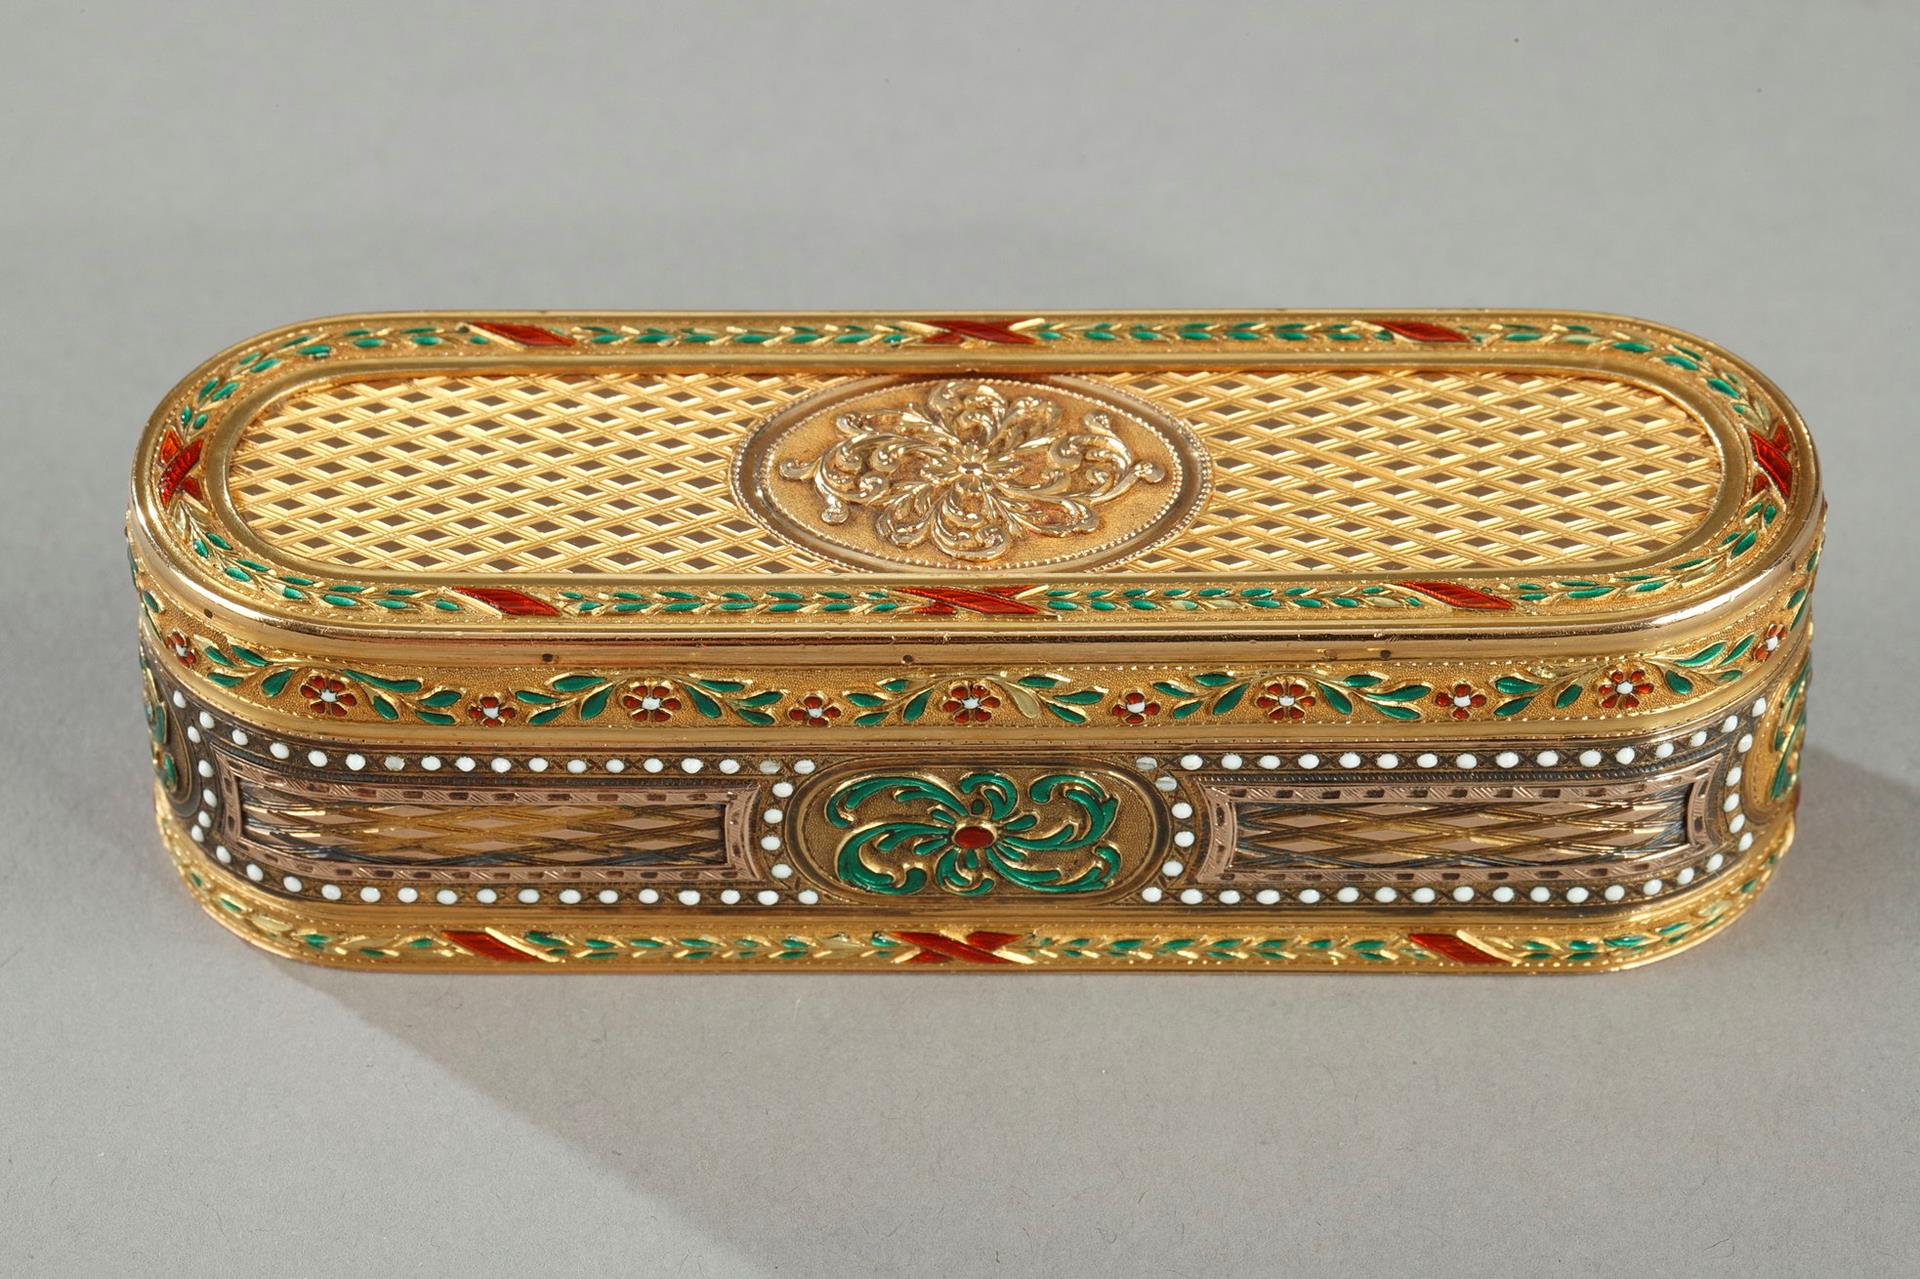 18th century Gold and enamel snuff-box.